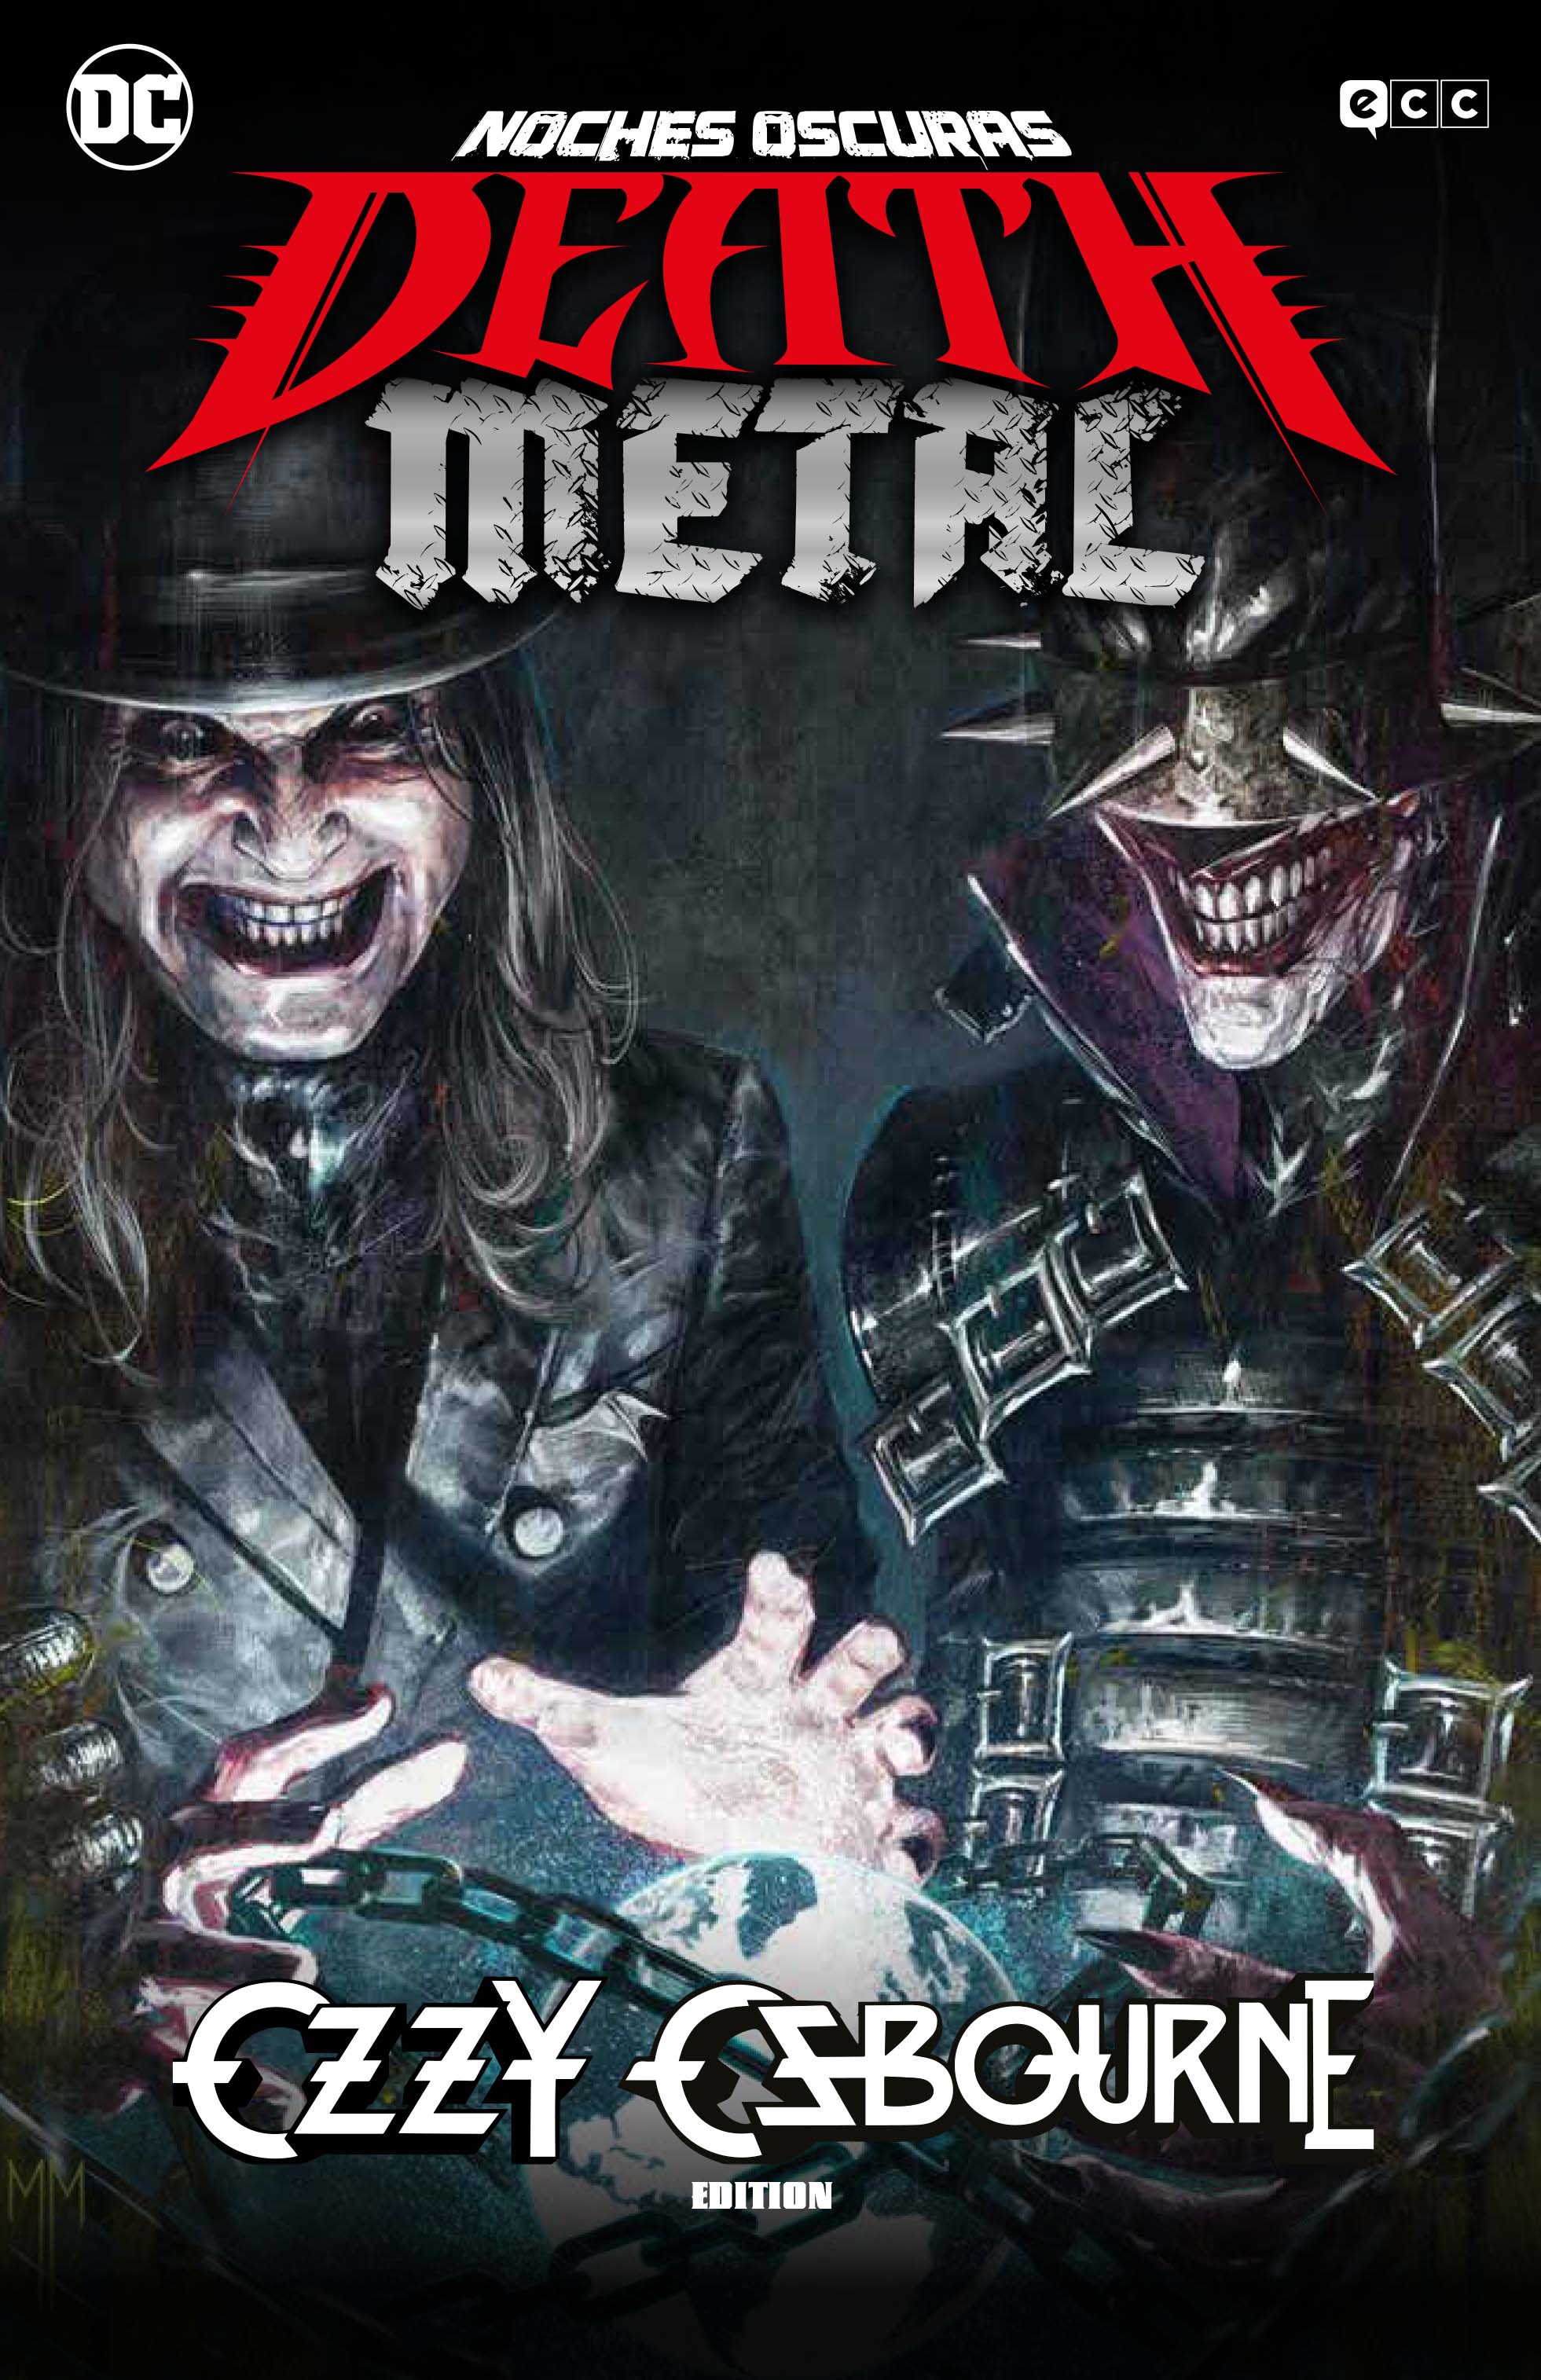 RUSTICA Noches oscuras: Death Metal núm. 07 Band edition Ozzy Osbourne